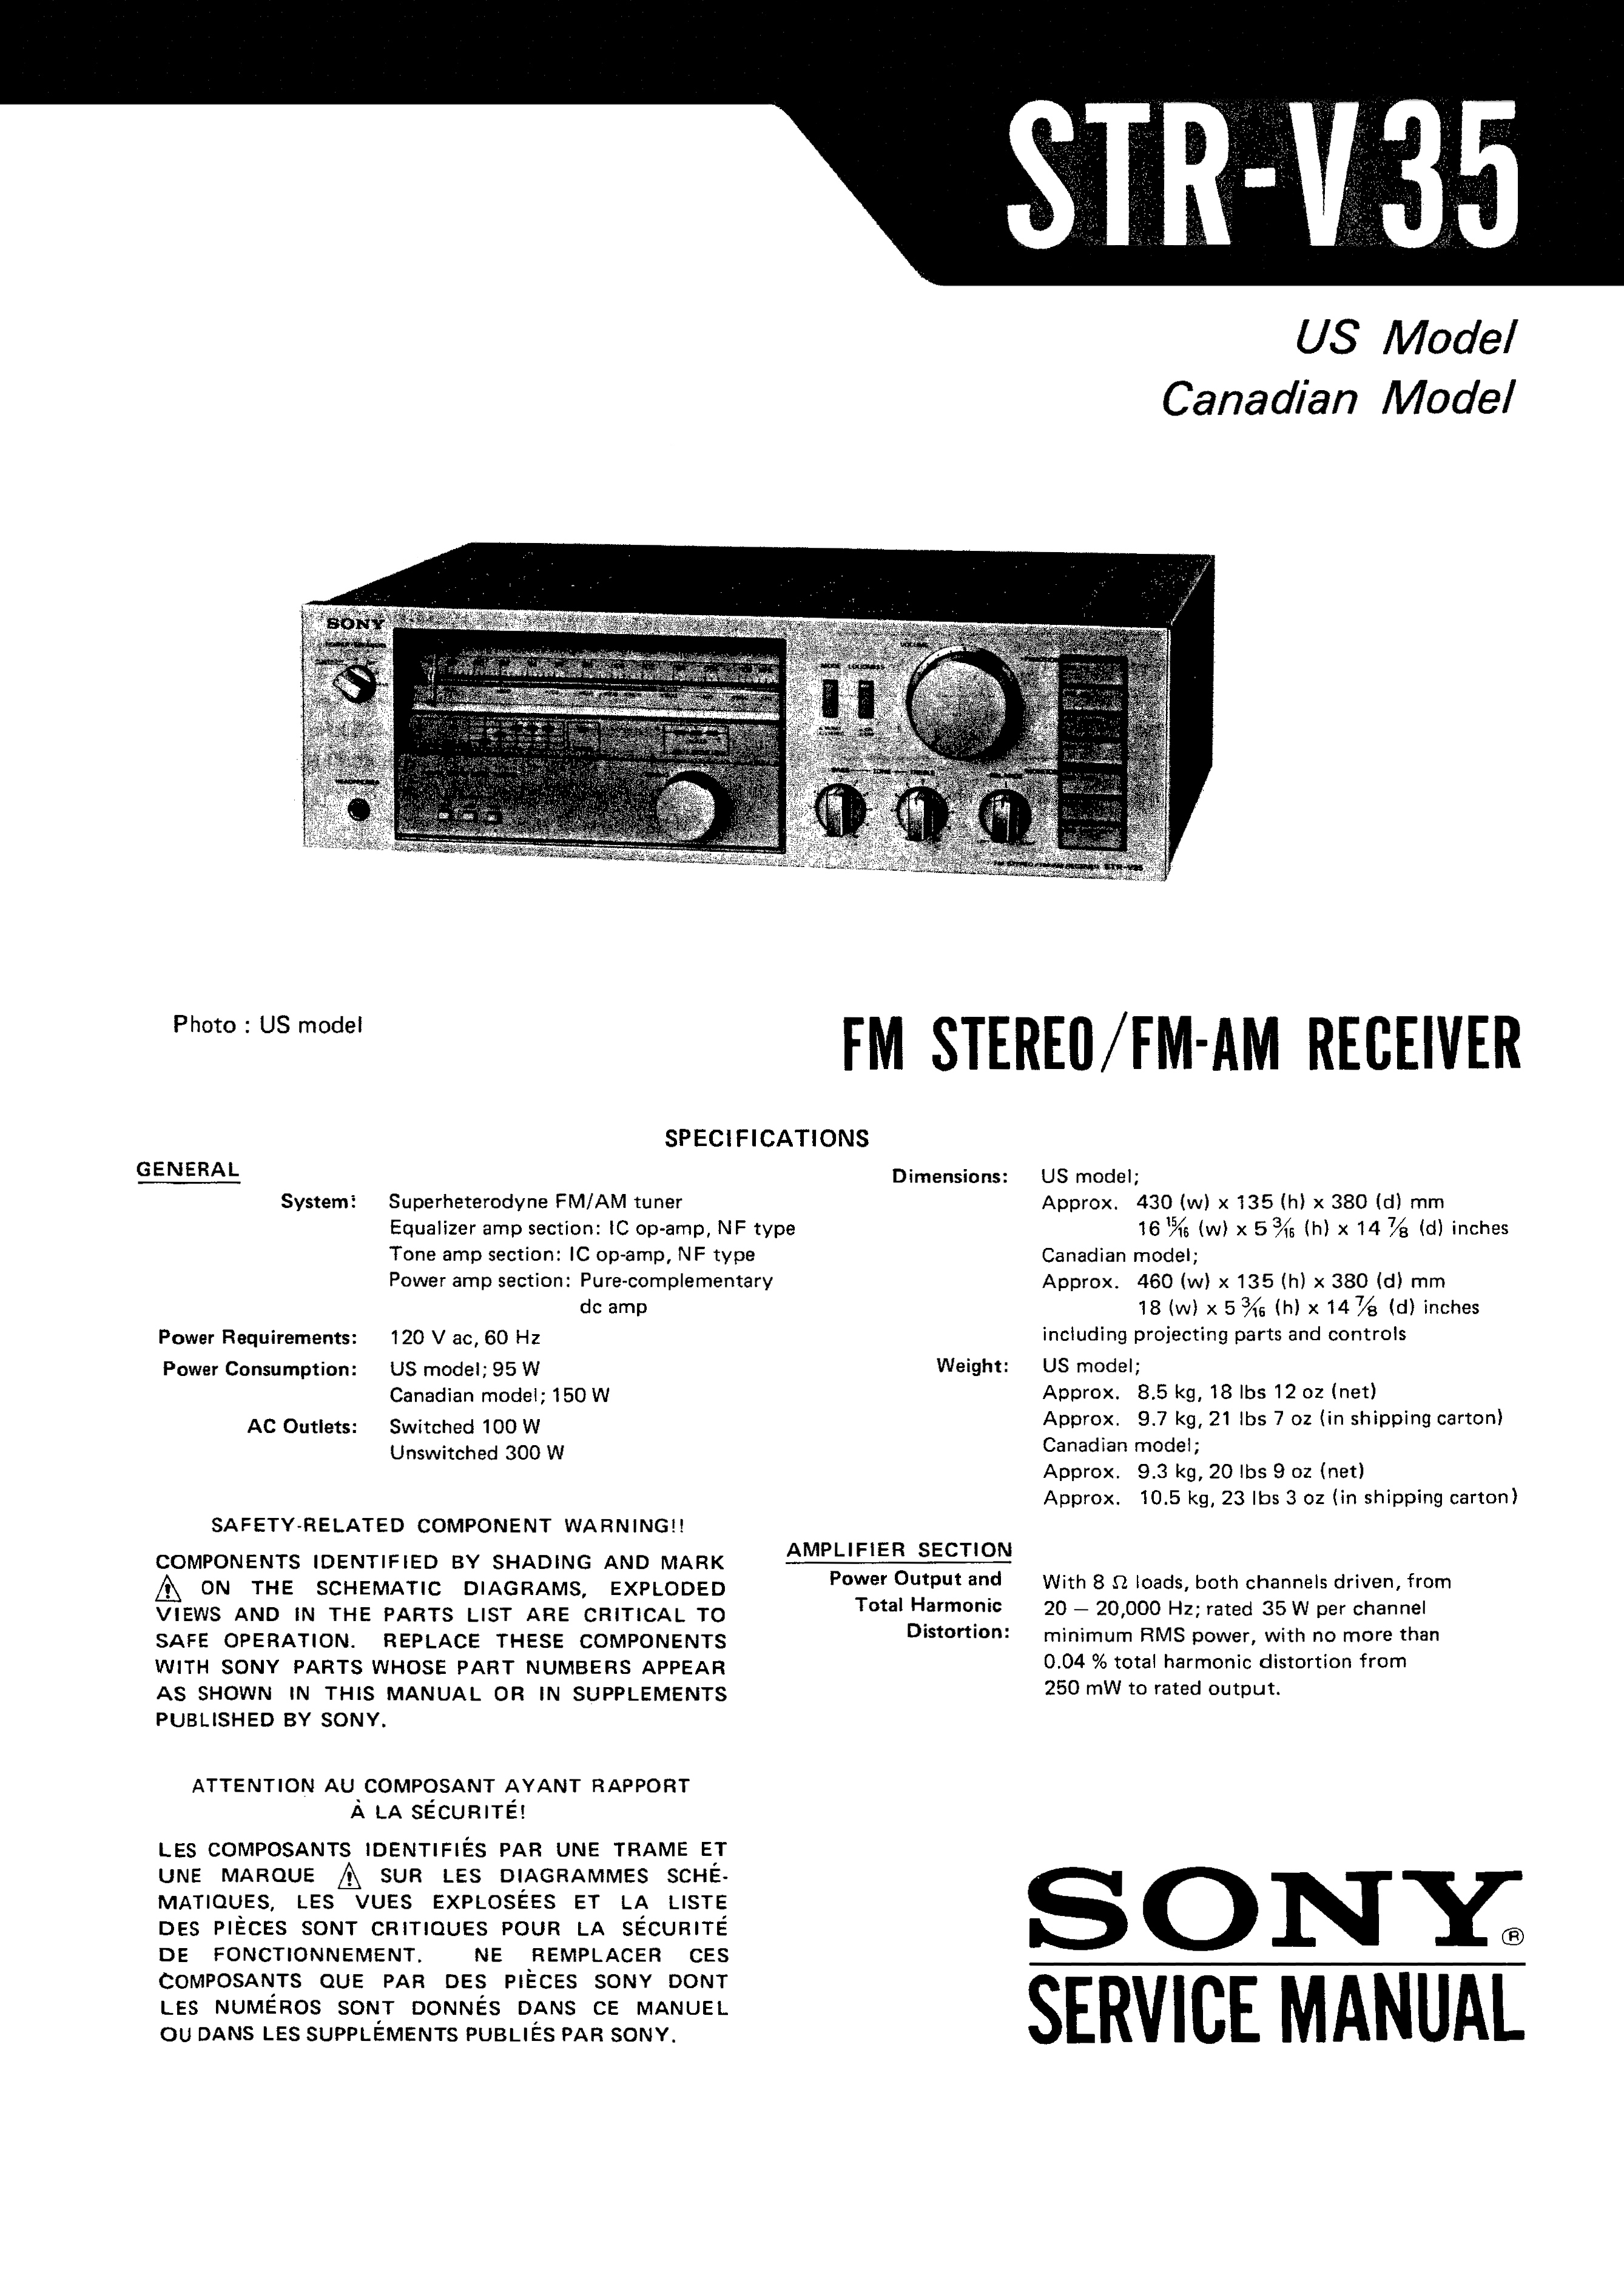 Sony STR-V 35-Daten-1980.jpg